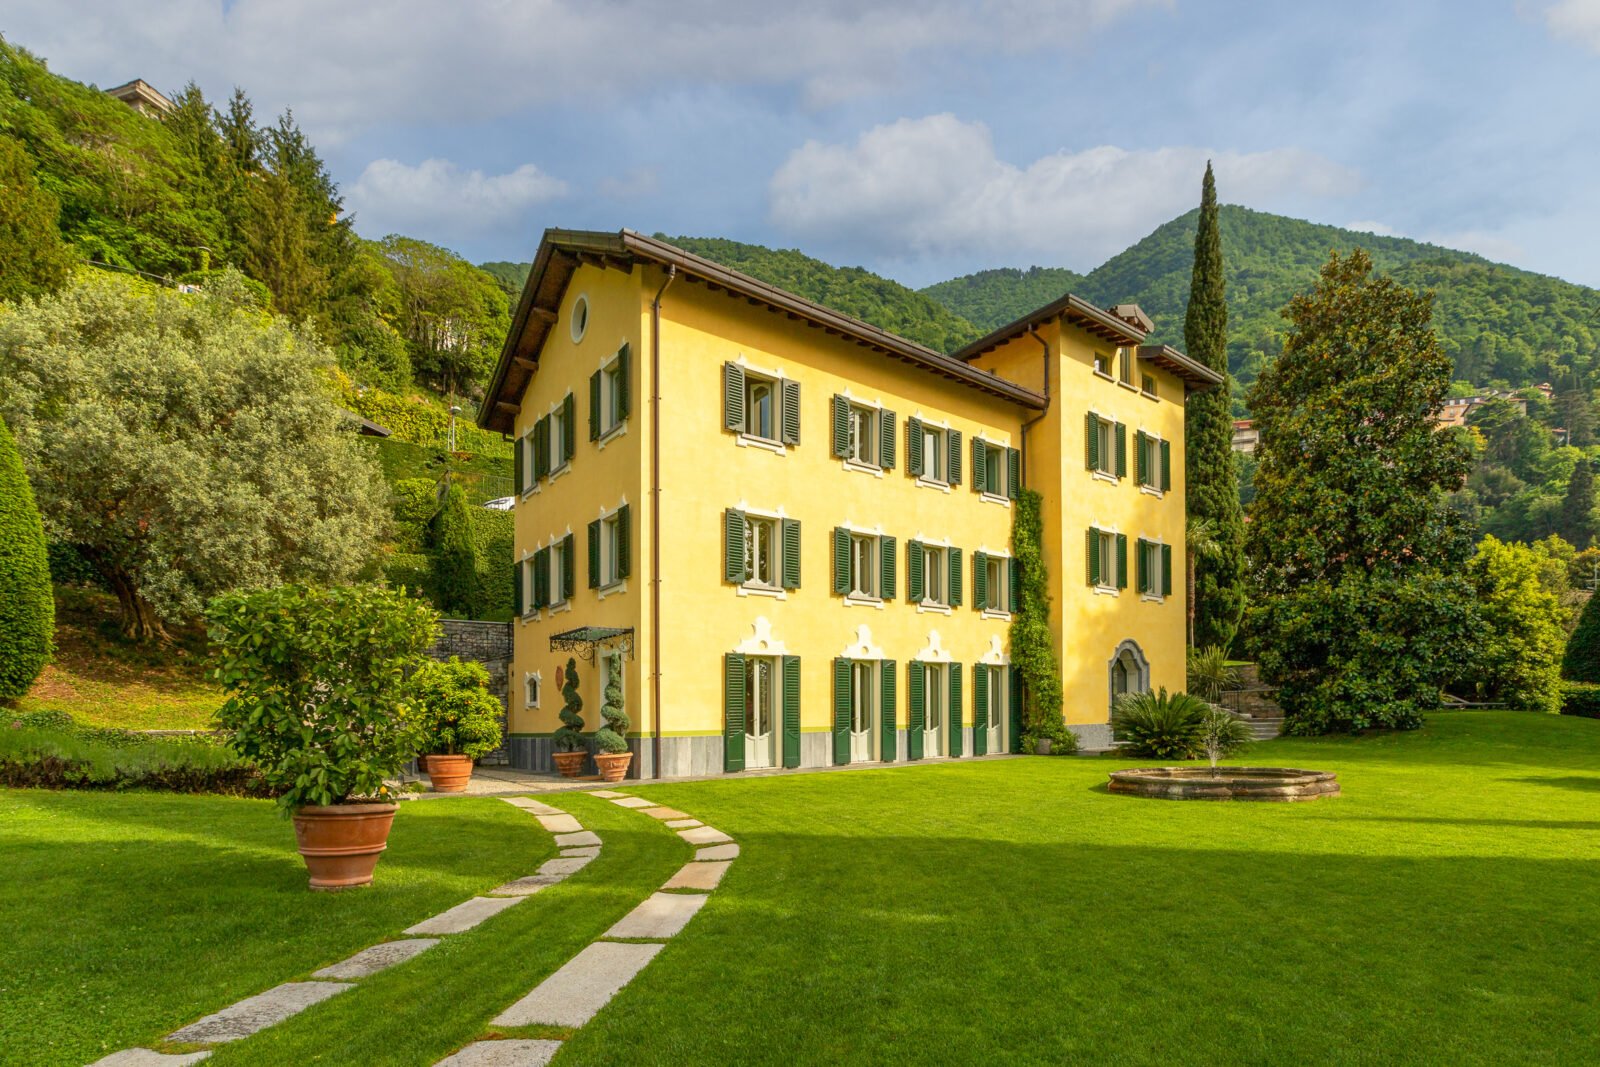 Francis York Waterfront Villa on Lake Como, Italy13.jpg